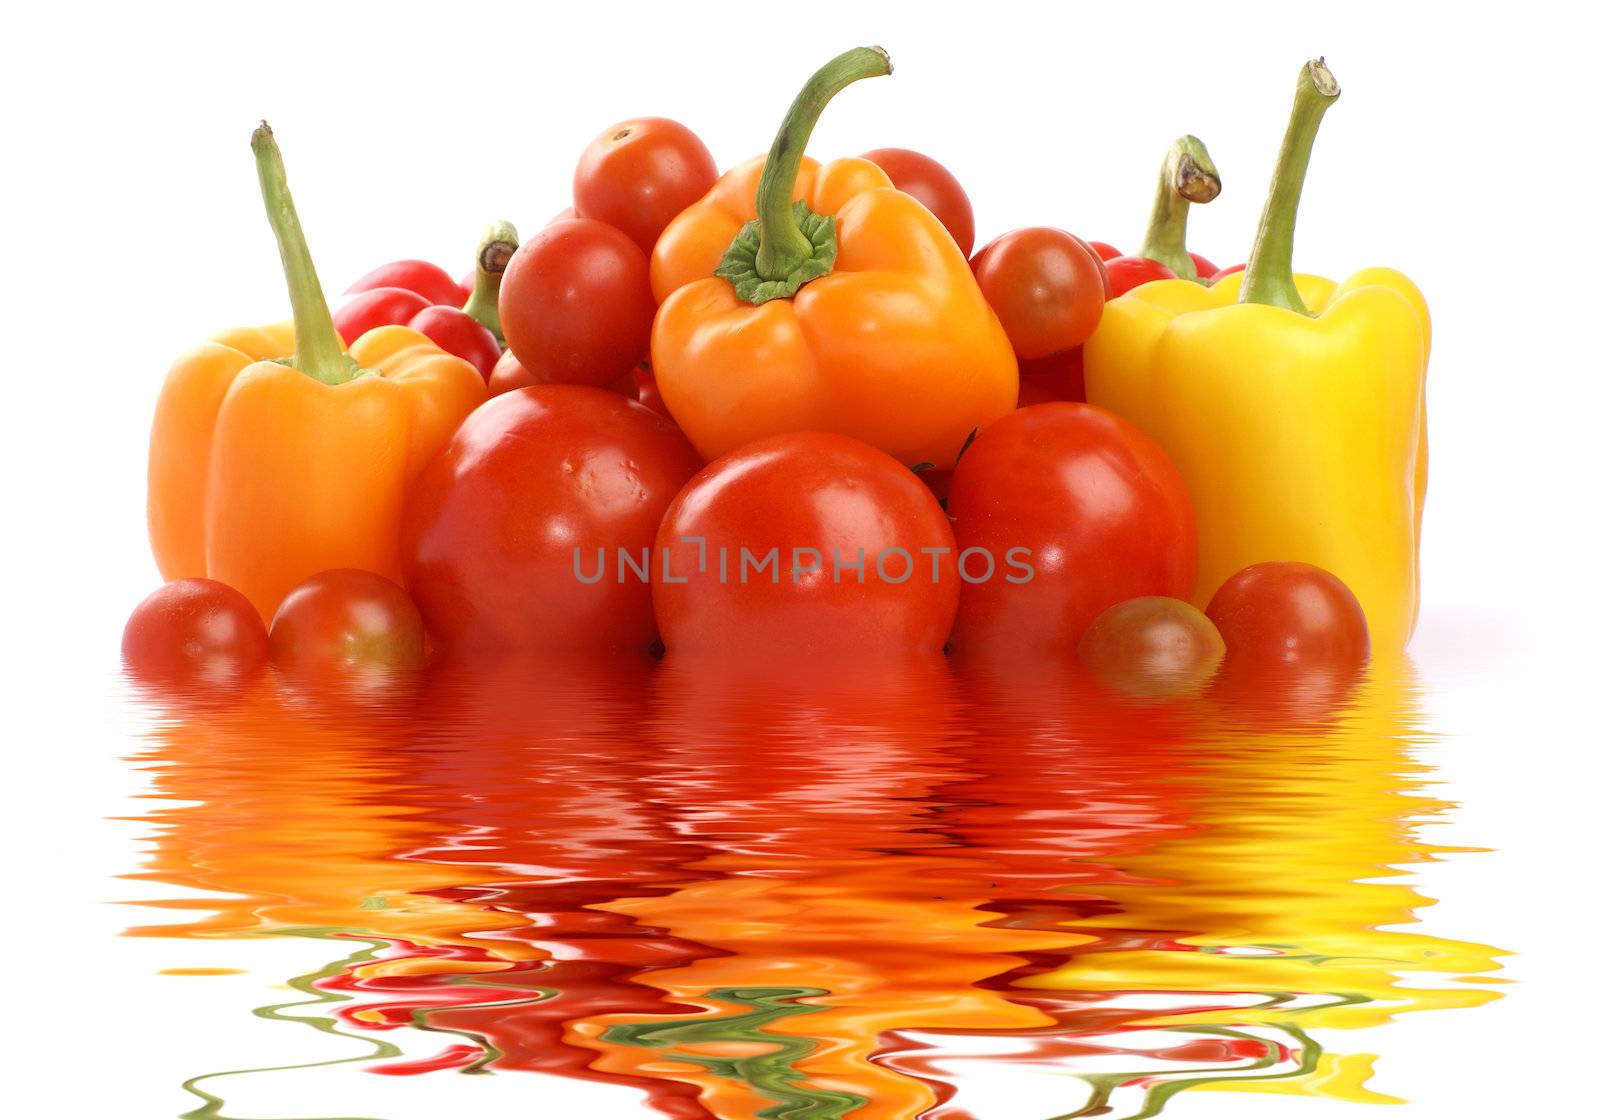 Tomatoes and paprika by shmeljov